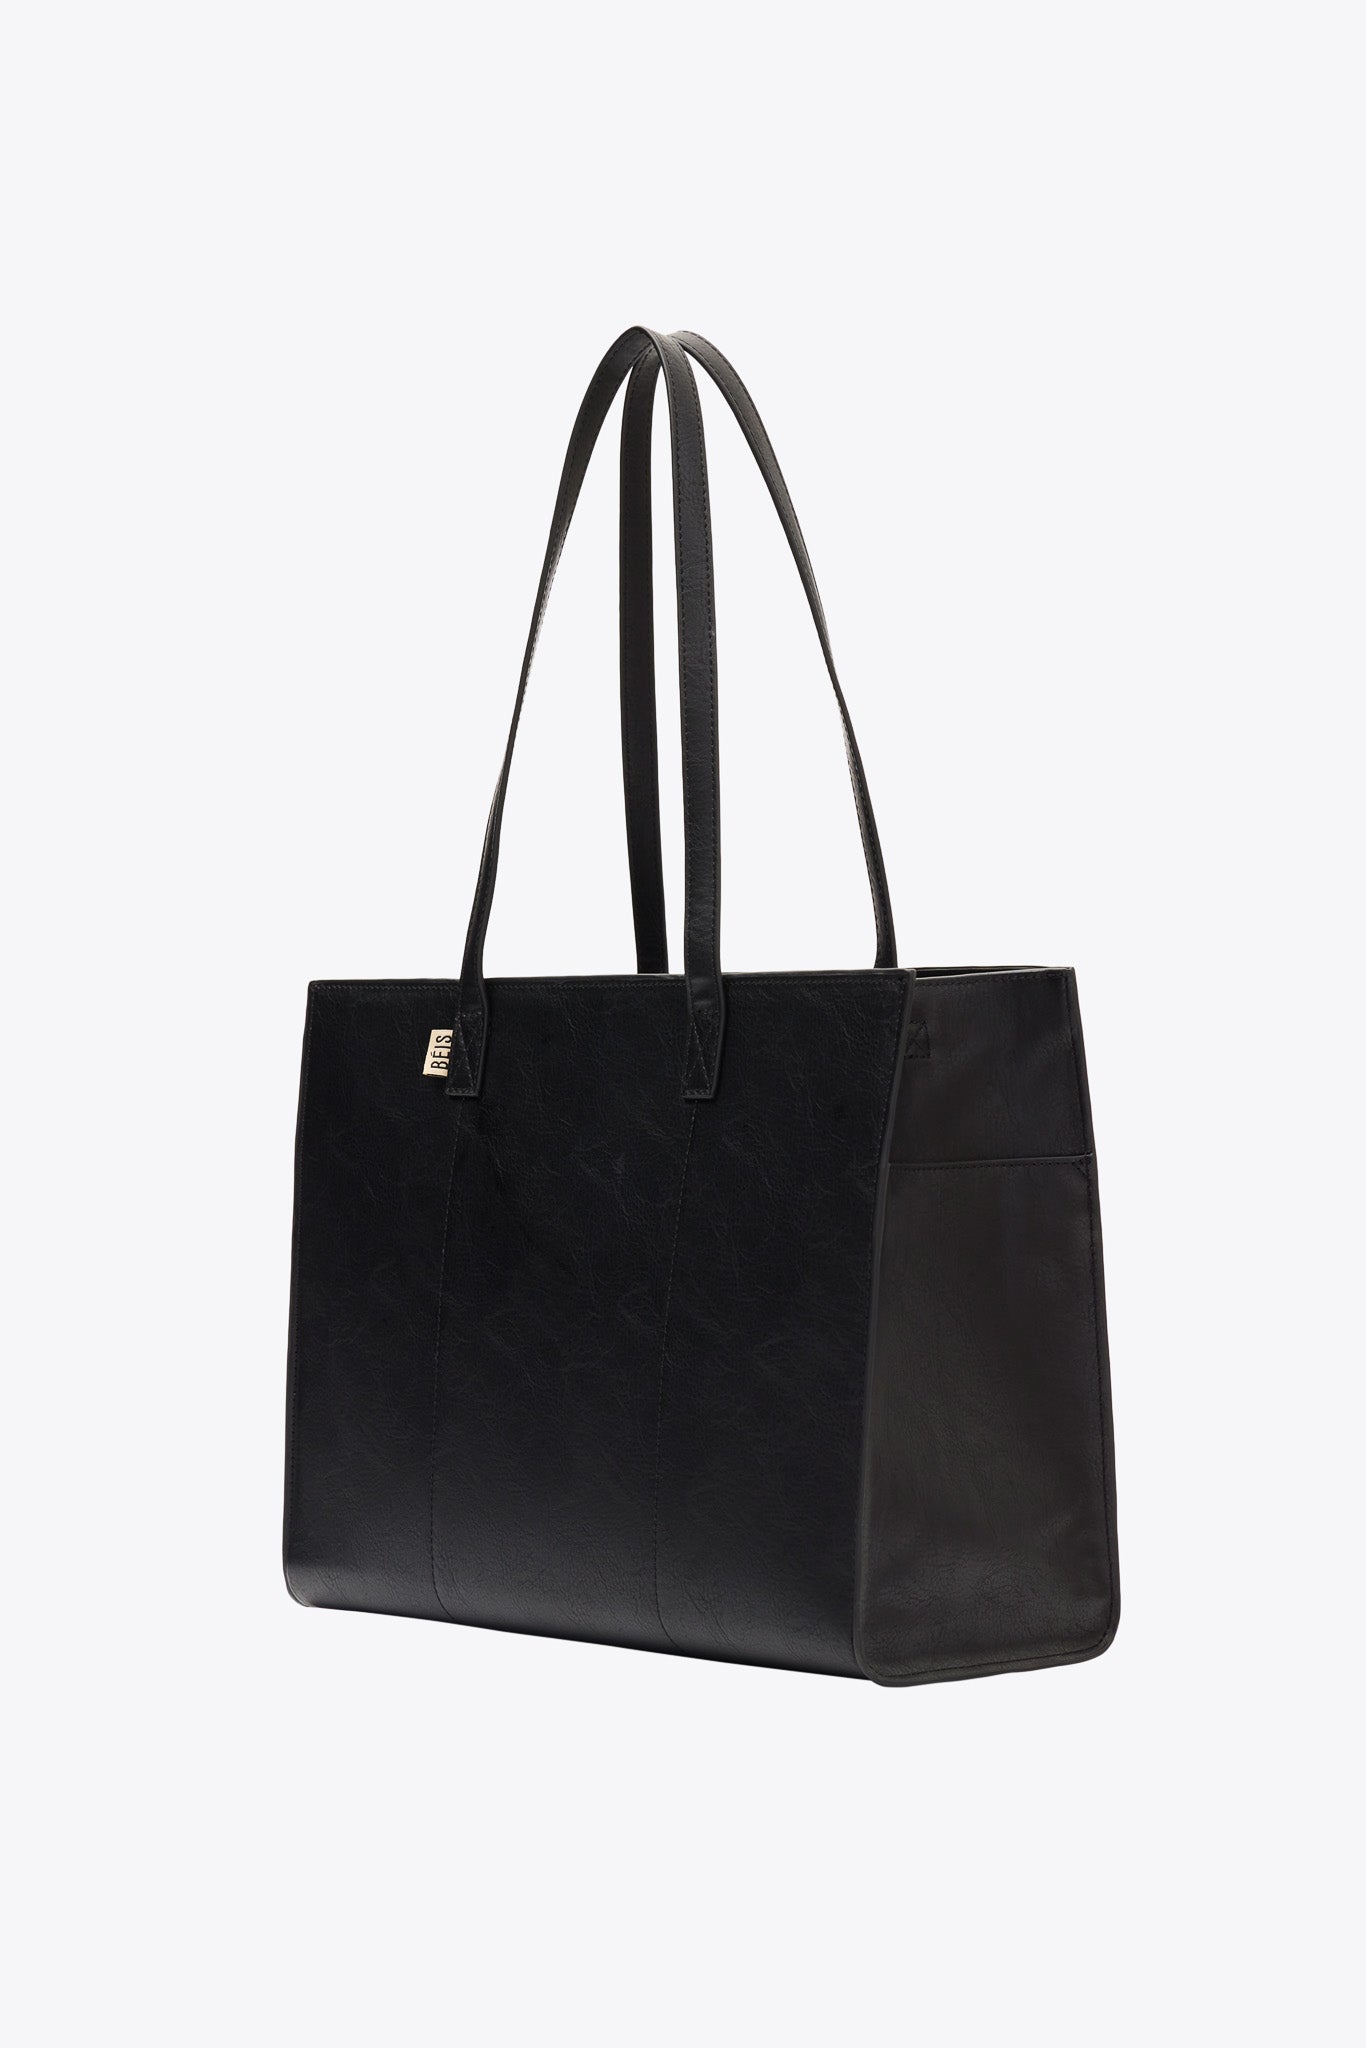 Black Woven Vegan Leather Shopper Bag Large Handbag Soft Purse for